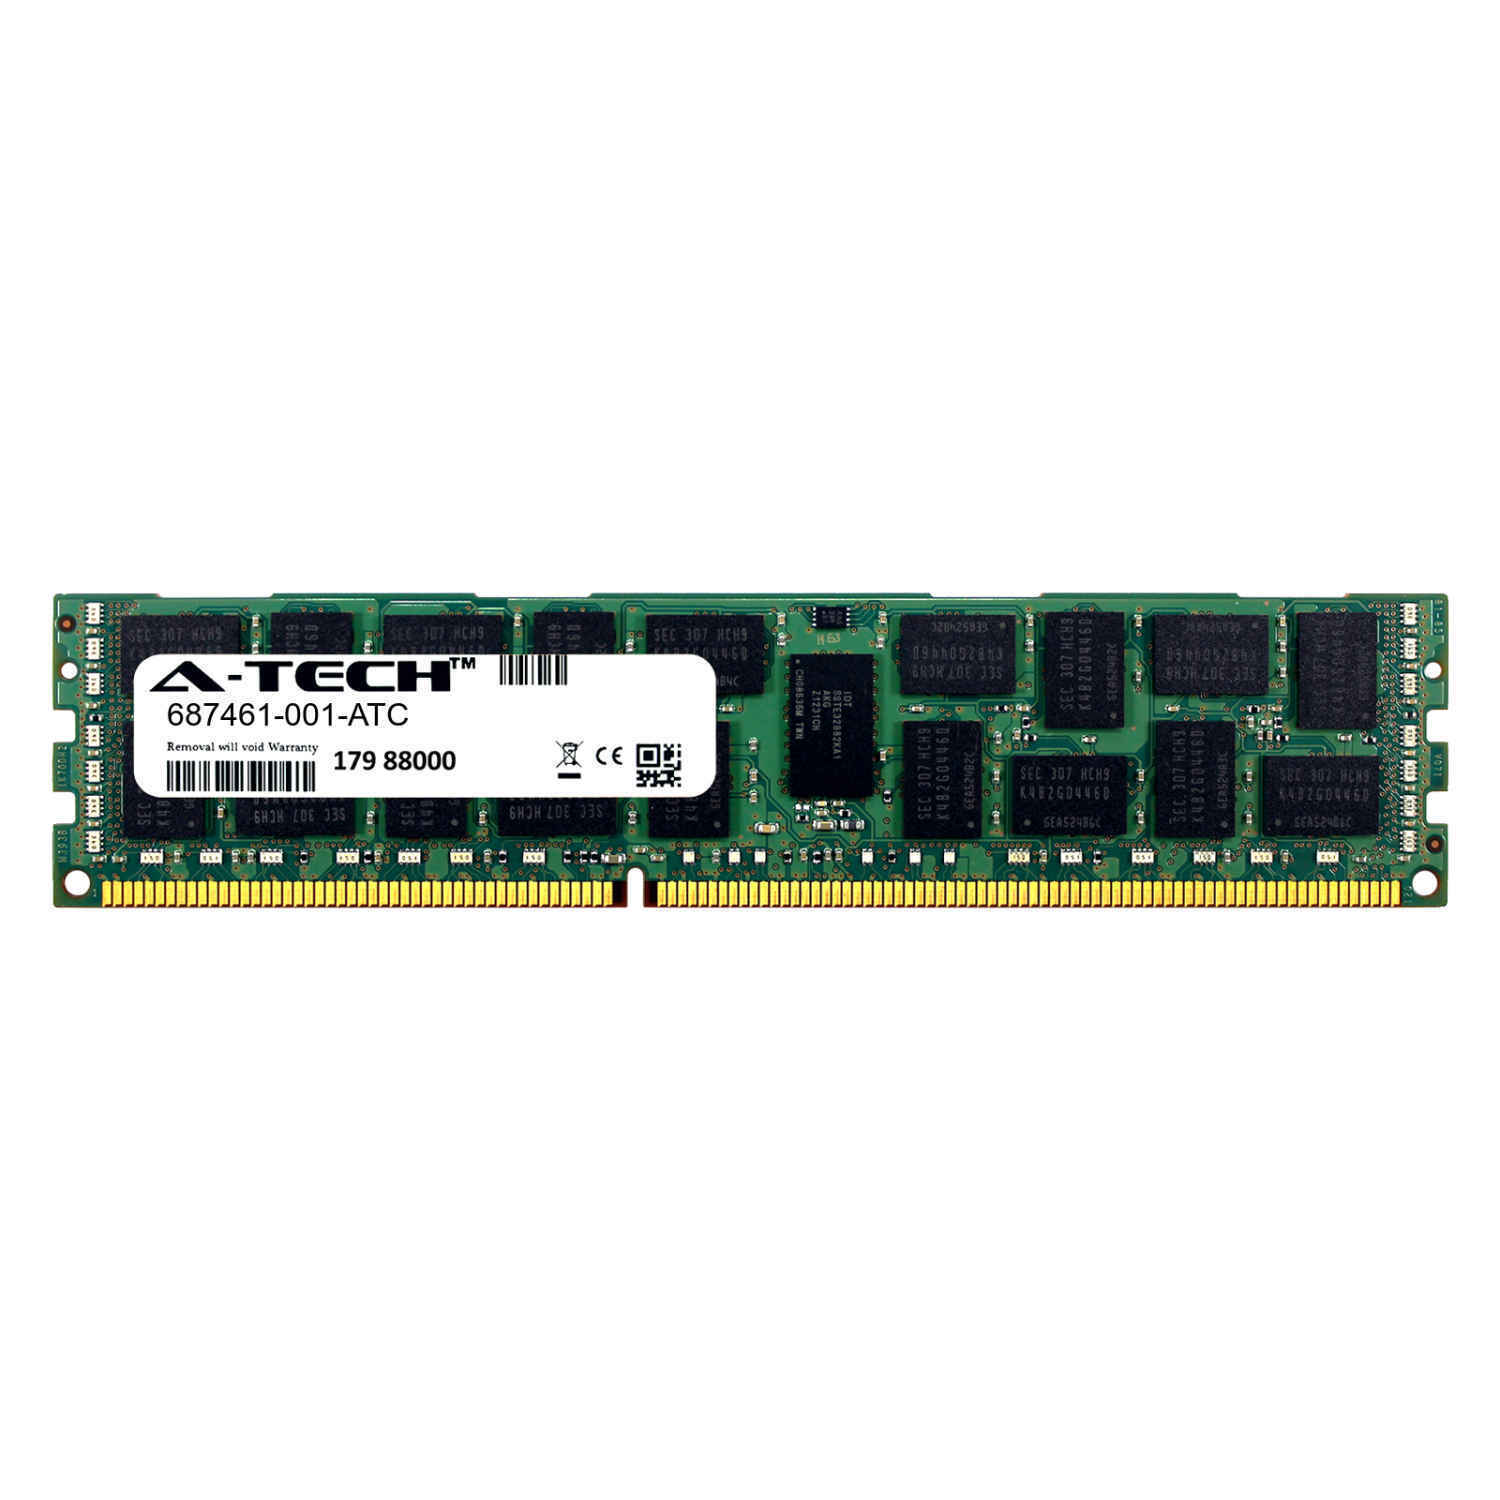 8GB DDR3 PC3-10600R 1333MHz RDIMM (HP 687461-001 Equivalent) Server Memory RAM